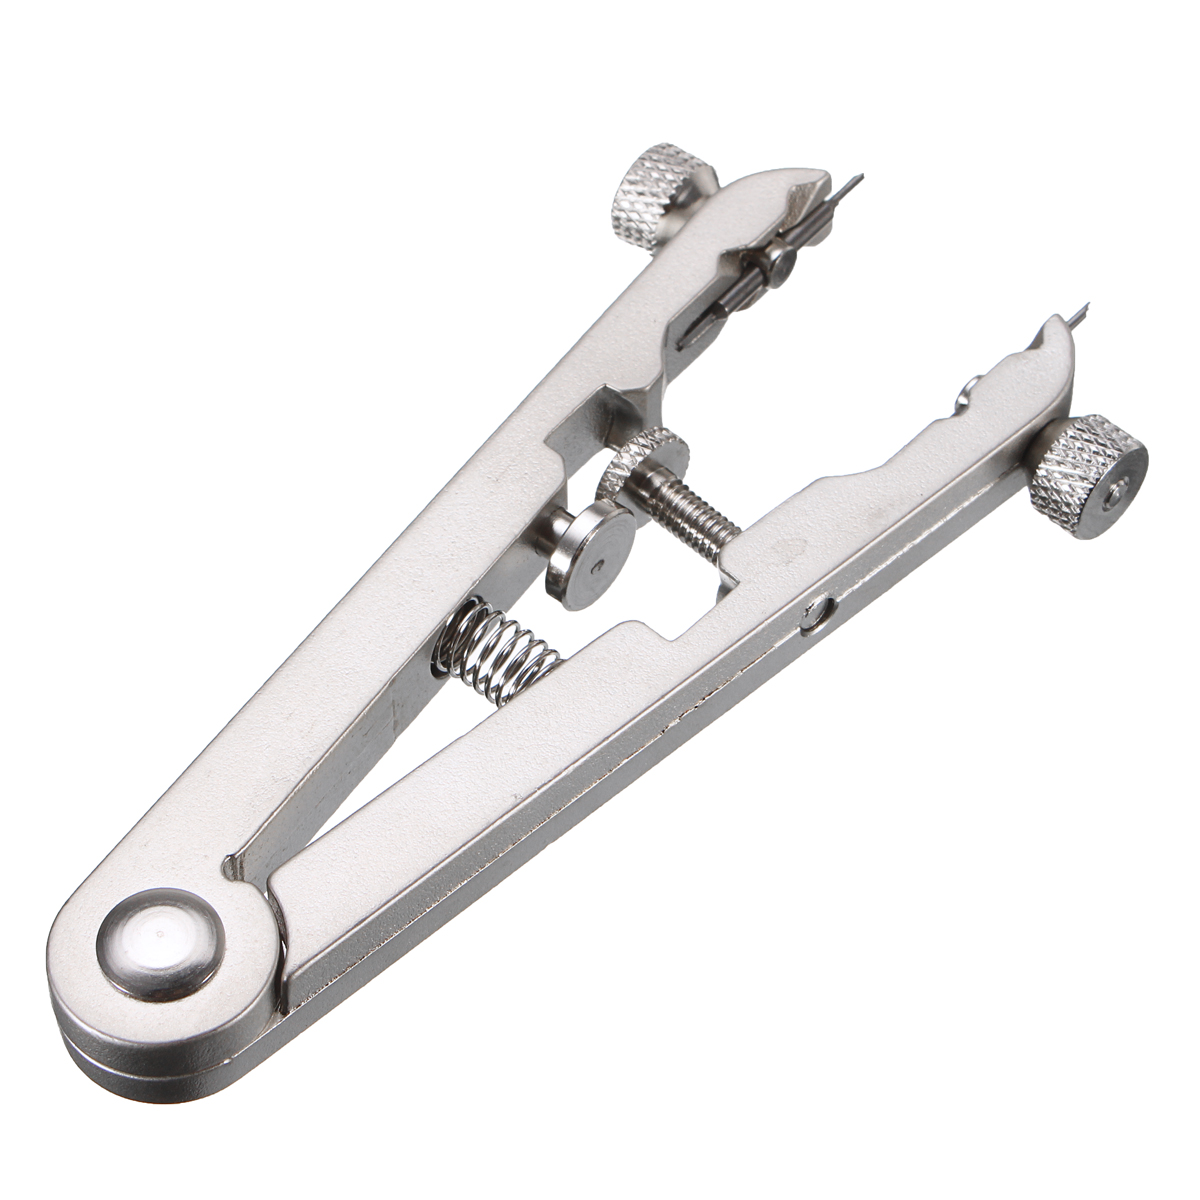 Bracelet-Spring-Bar-Remover-Watch-Tweezer-Strip-Replace-Tool-For-ROLEX-6825-1183855-4